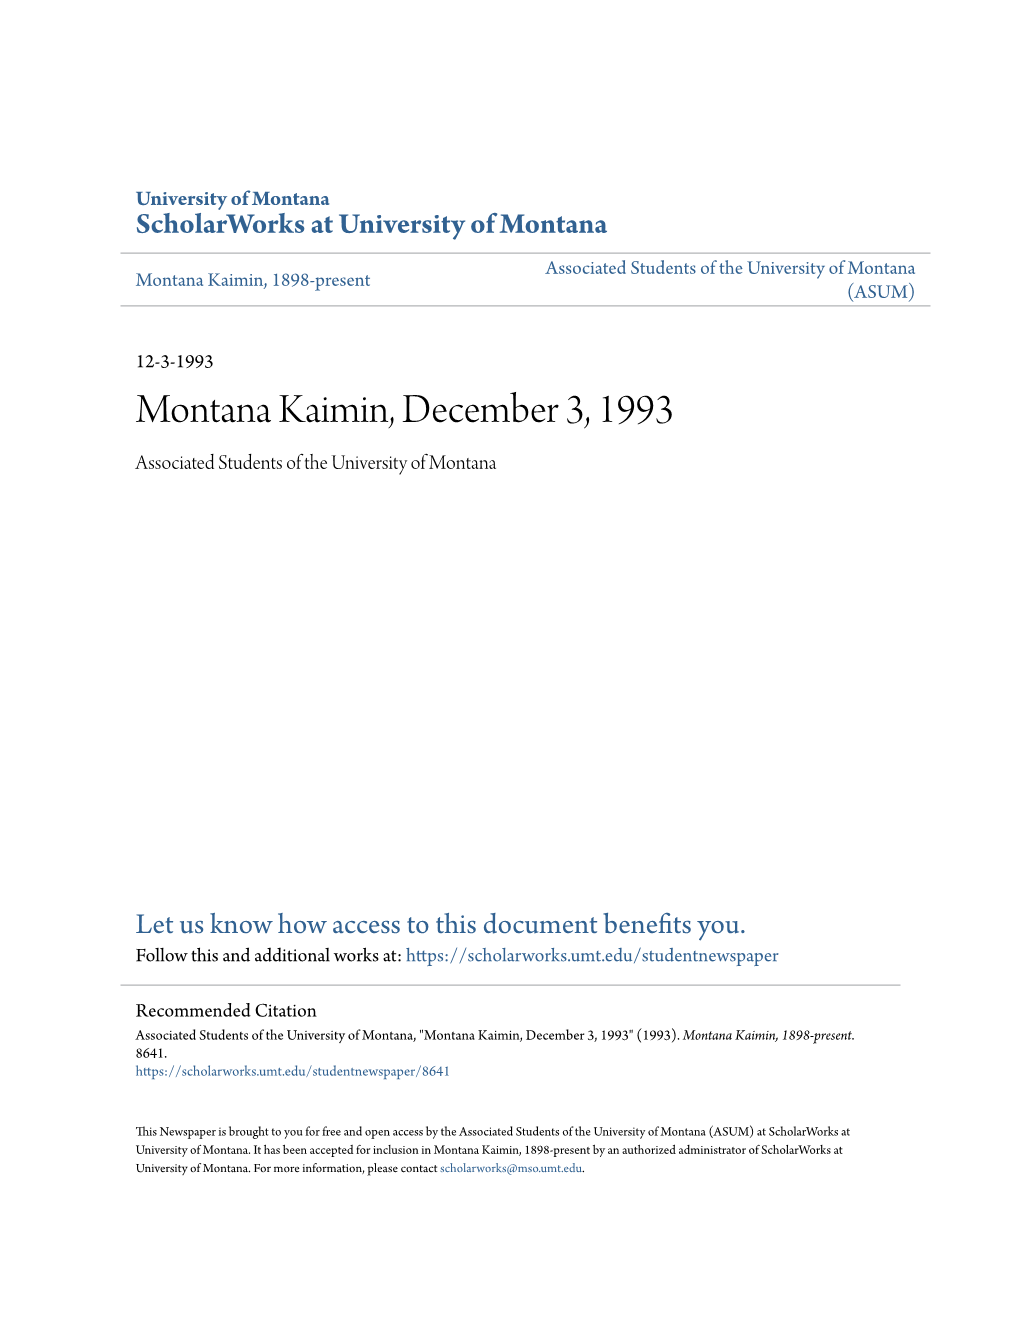 Montana Kaimin, December 3, 1993 Associated Students of the University of Montana